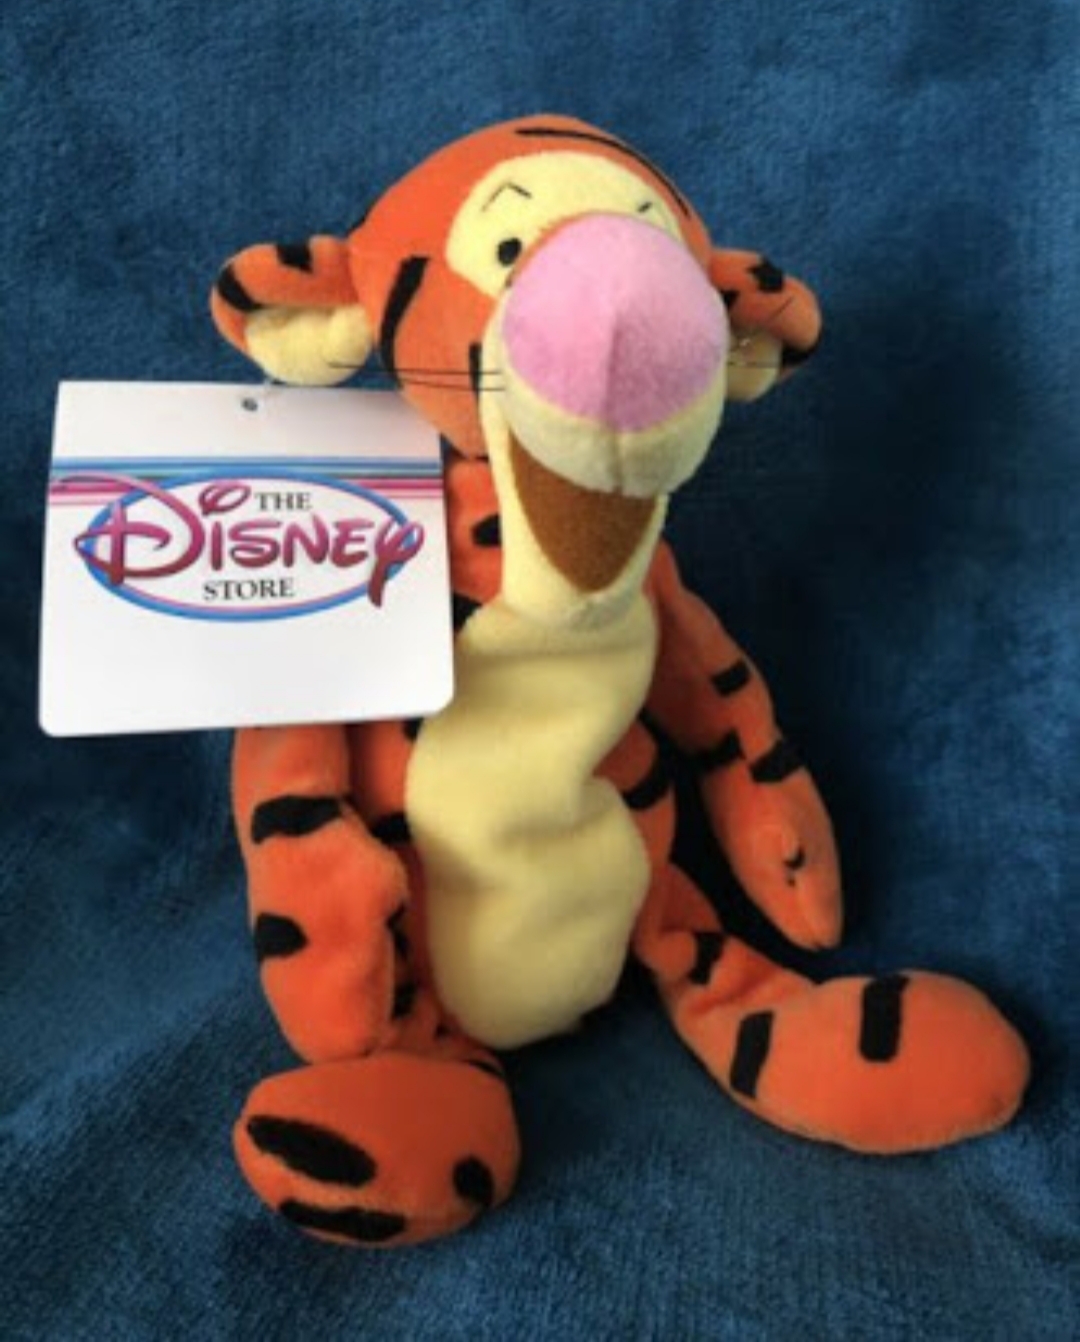 Tigger Plush Toy 18" Sitting Disney Winnie The Pooh Fluffy Orange Fur Lovey Soft for sale online 